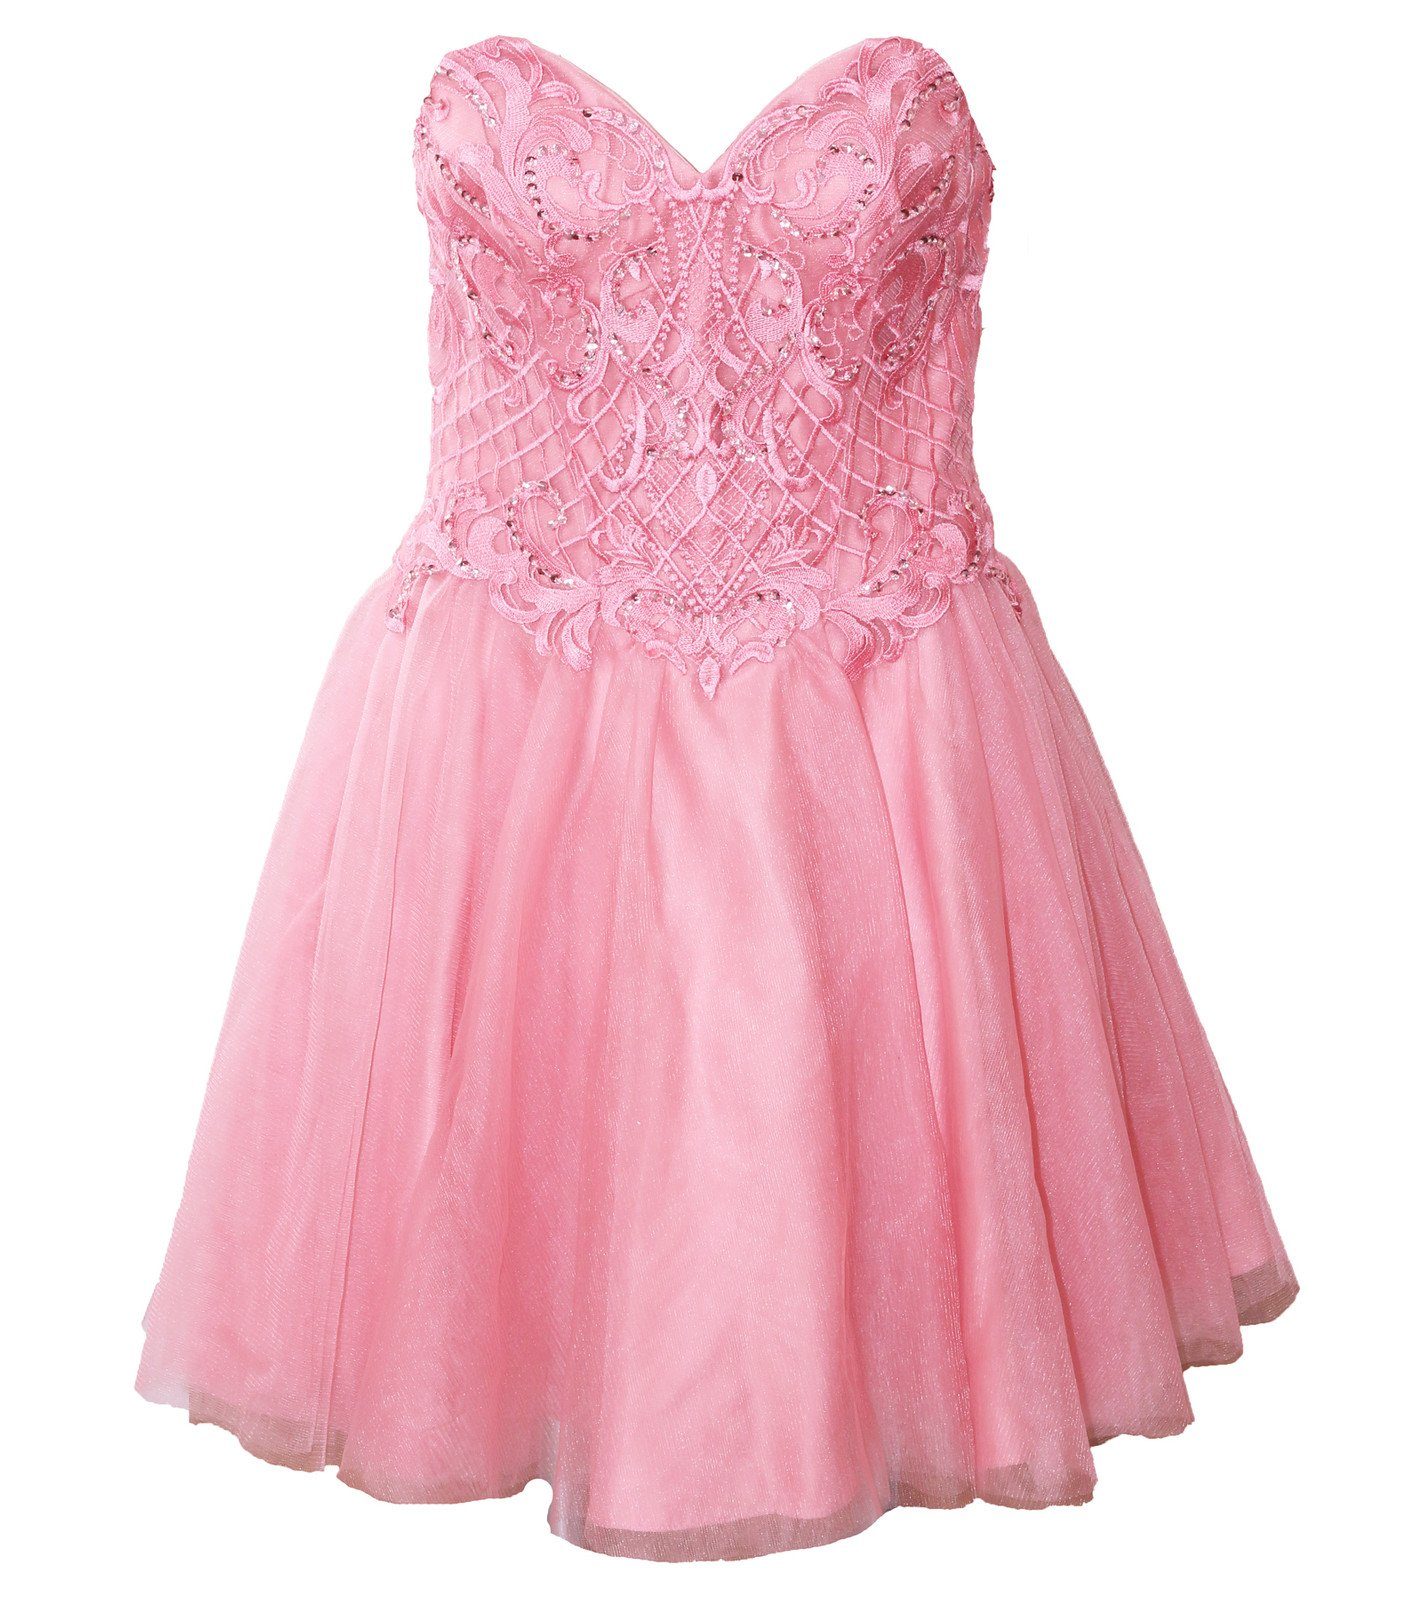 Laona Minikleid »LOANA Cocktail-Kleid funkelndes Damen Party-Kleid Ball- Kleid mit Tüll Mini-Kleid Altrosa« online kaufen | OTTO